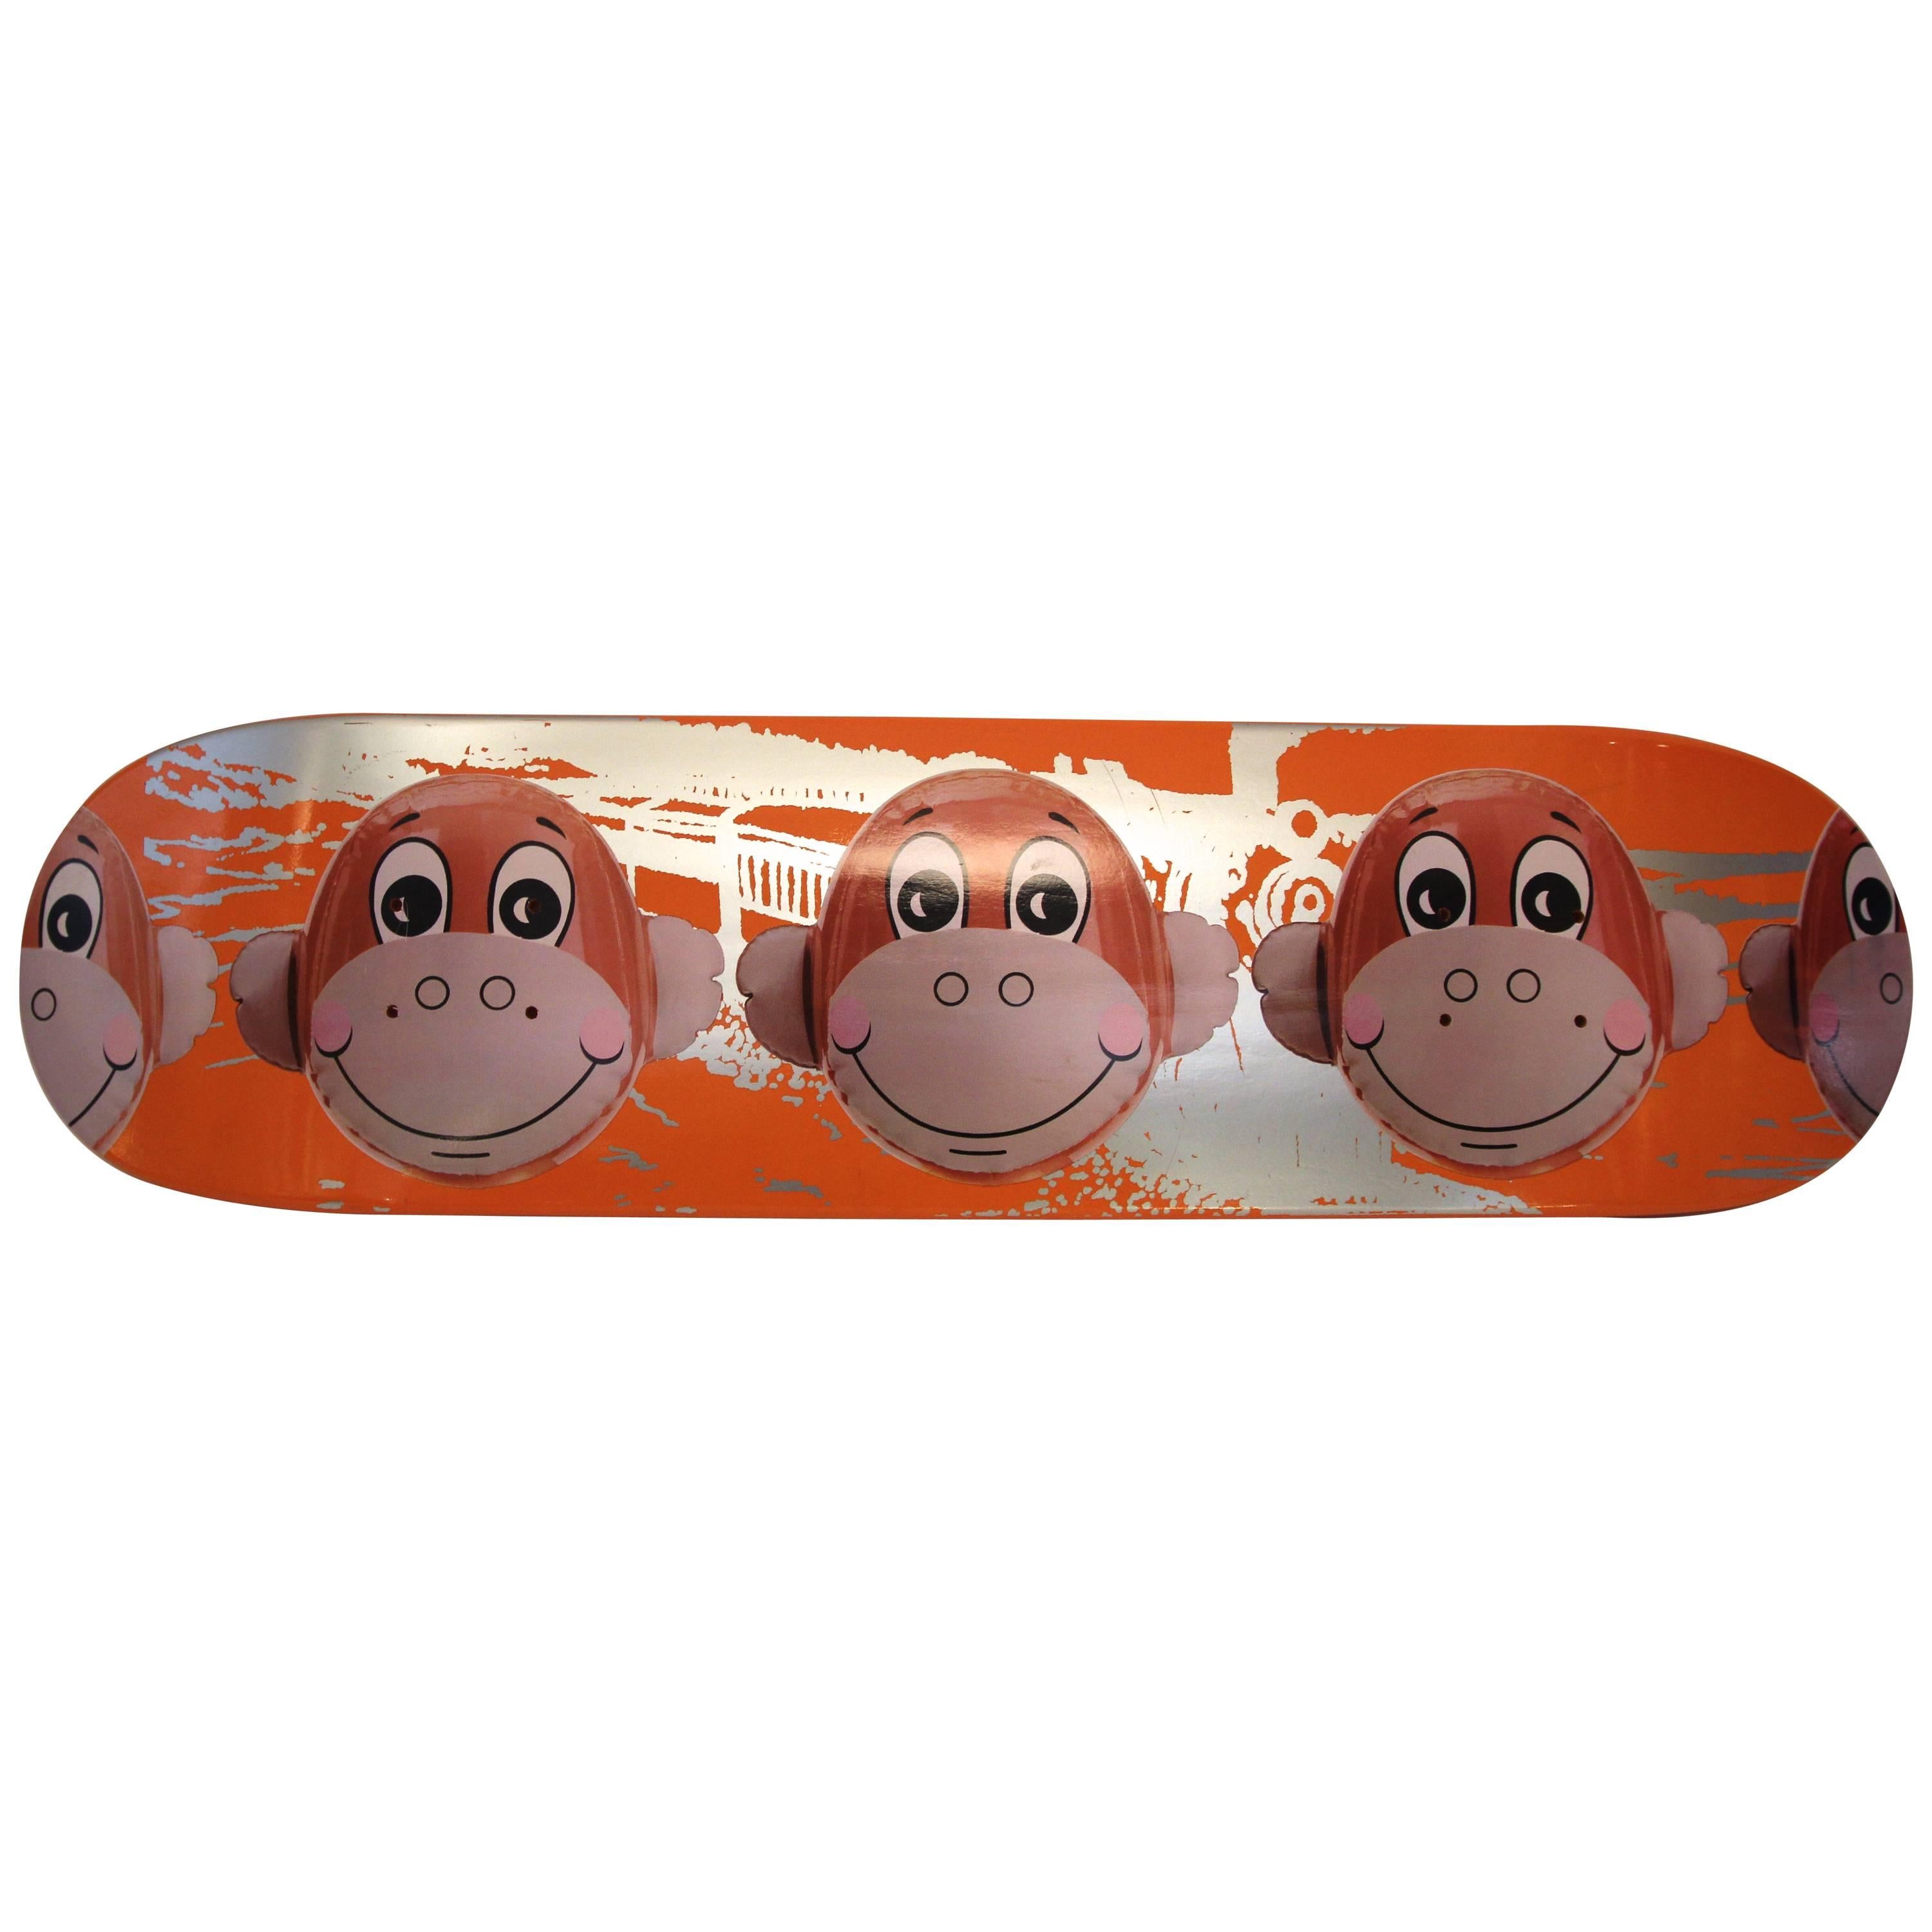 Jeff Koons '1955', Monkey Train Skateboard Deck, Limited Edition, circa 2006